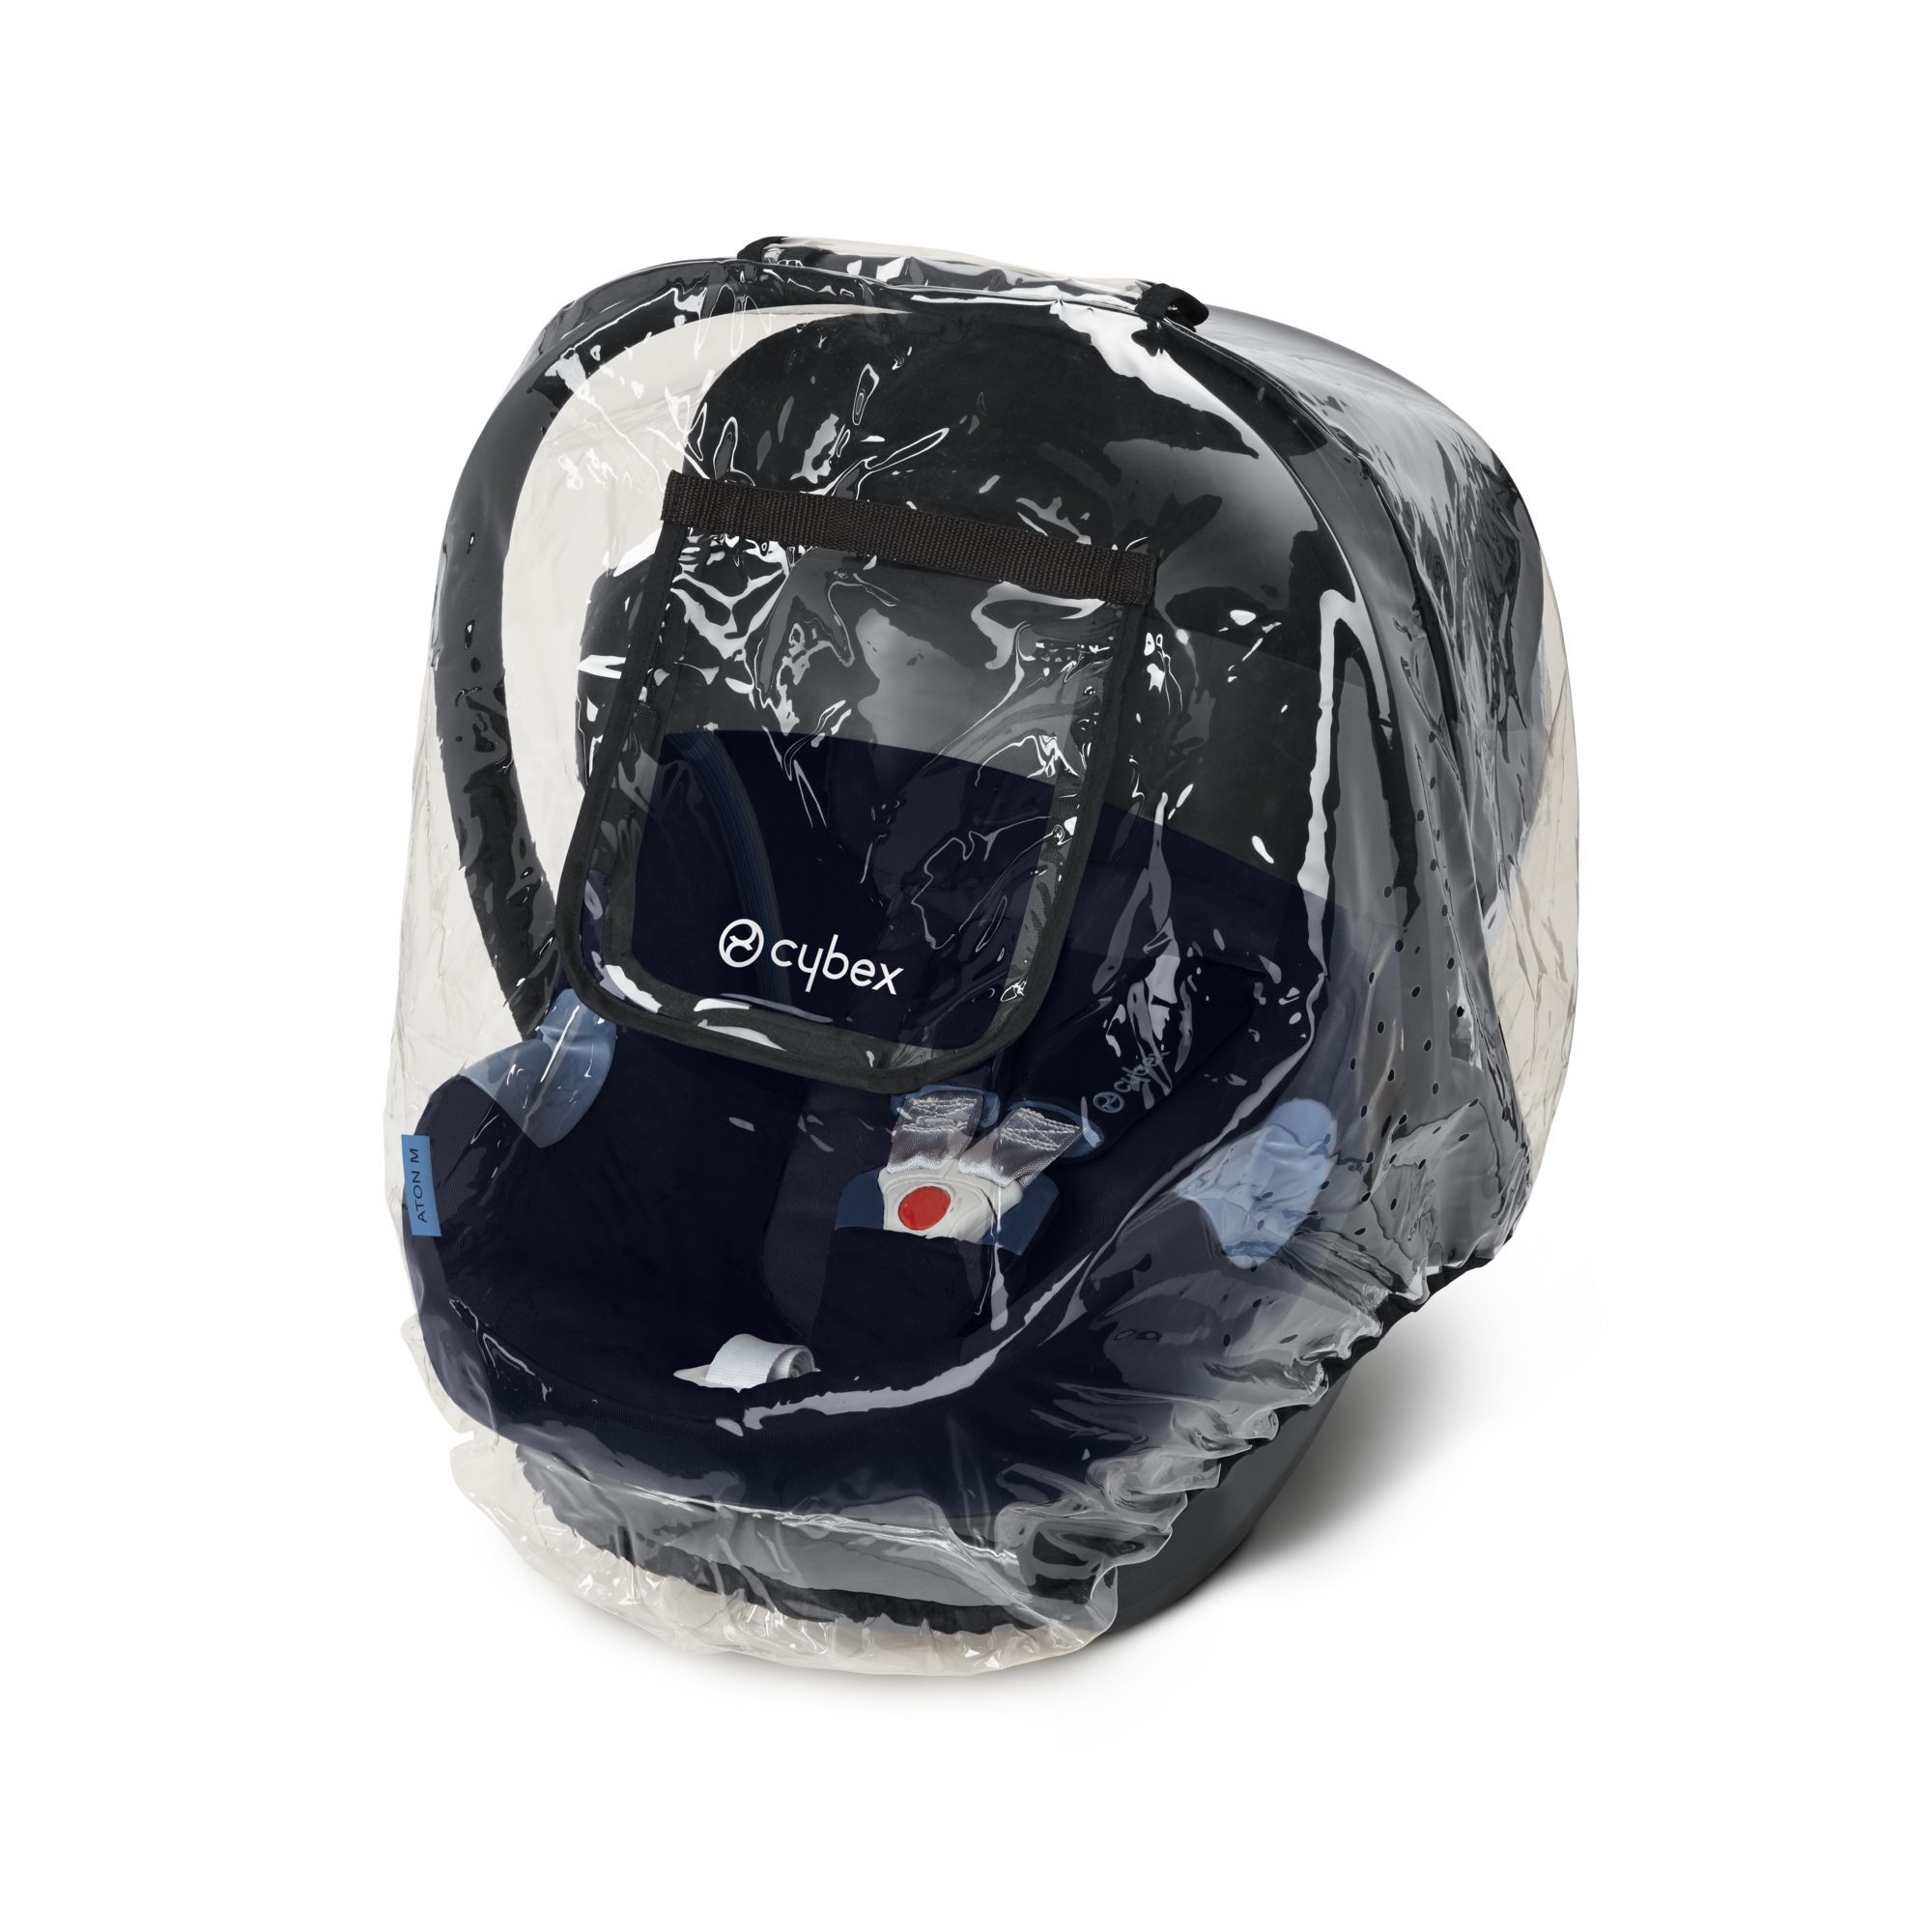 620947722829 Black Cybex Rain Cover to fit CYBEX CLOUD car seat Raincover VENTILATED 